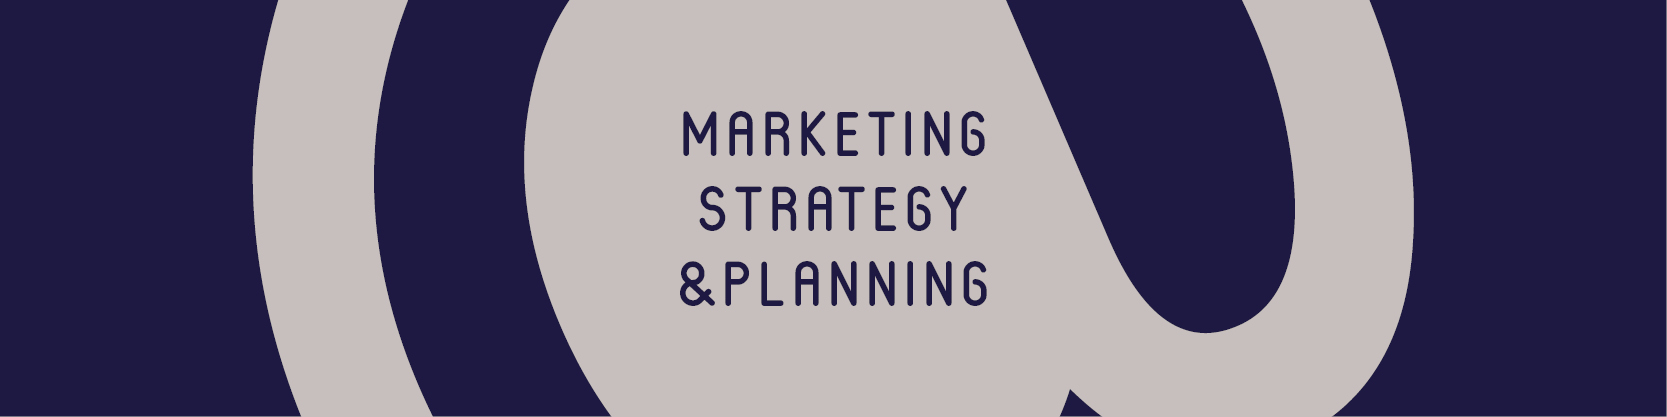 Marketing Strategy & Planning - Allera Marketing